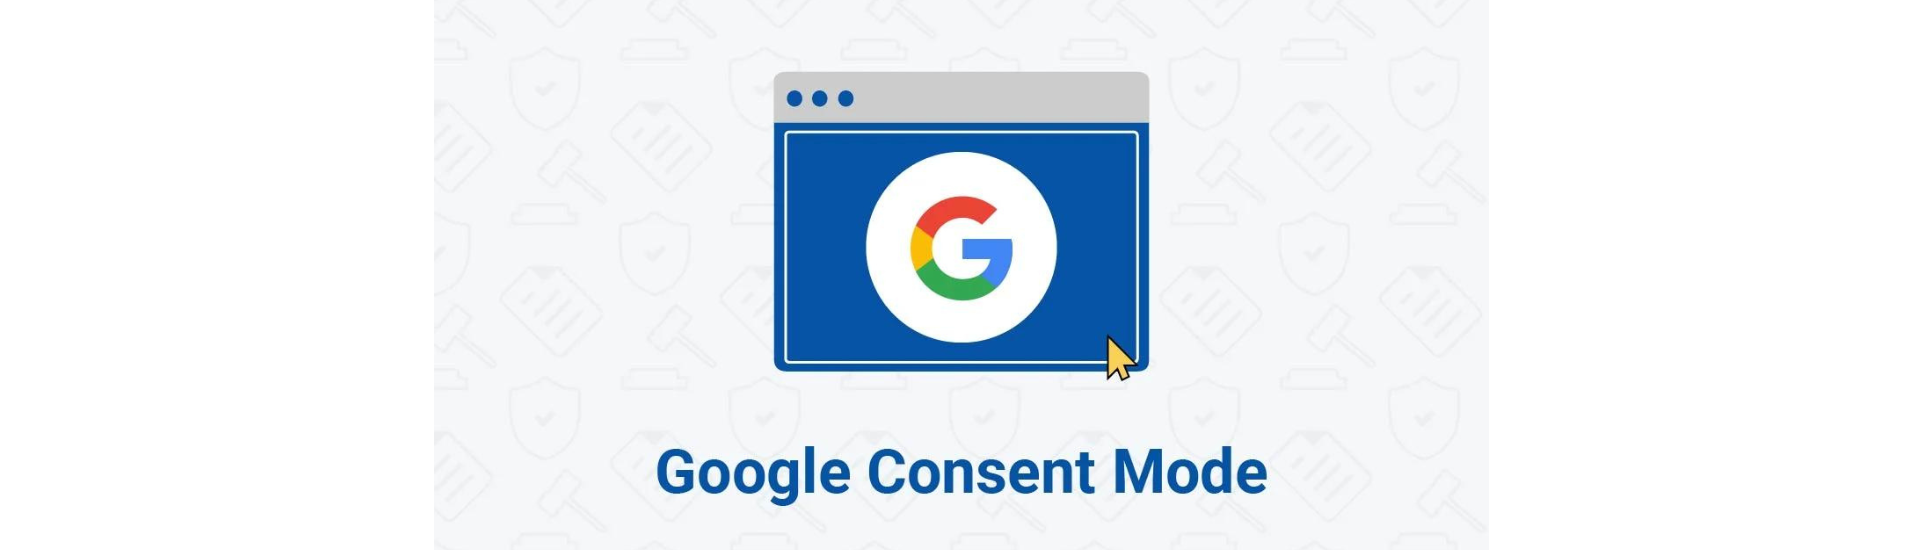 ¿Qué es Google Consent Mode?